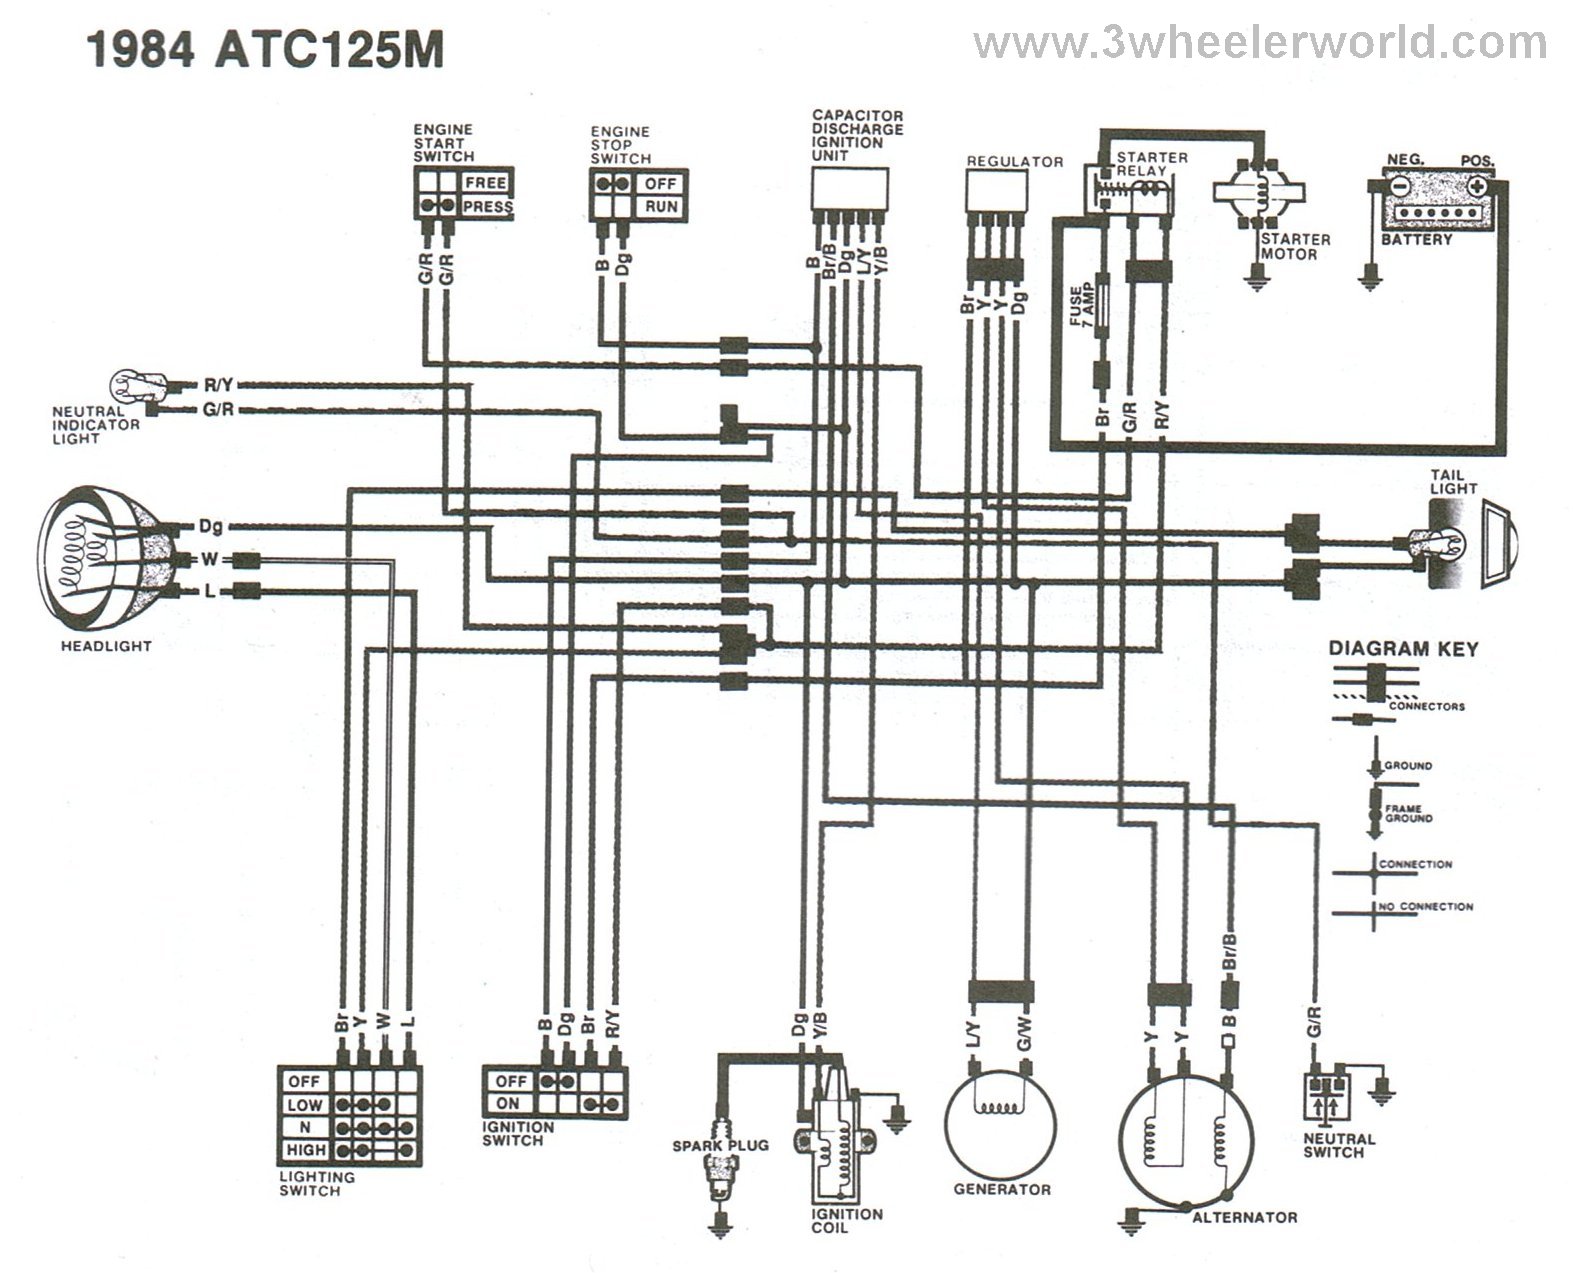 Wiring Diagram For Honda Atv from schematron.org